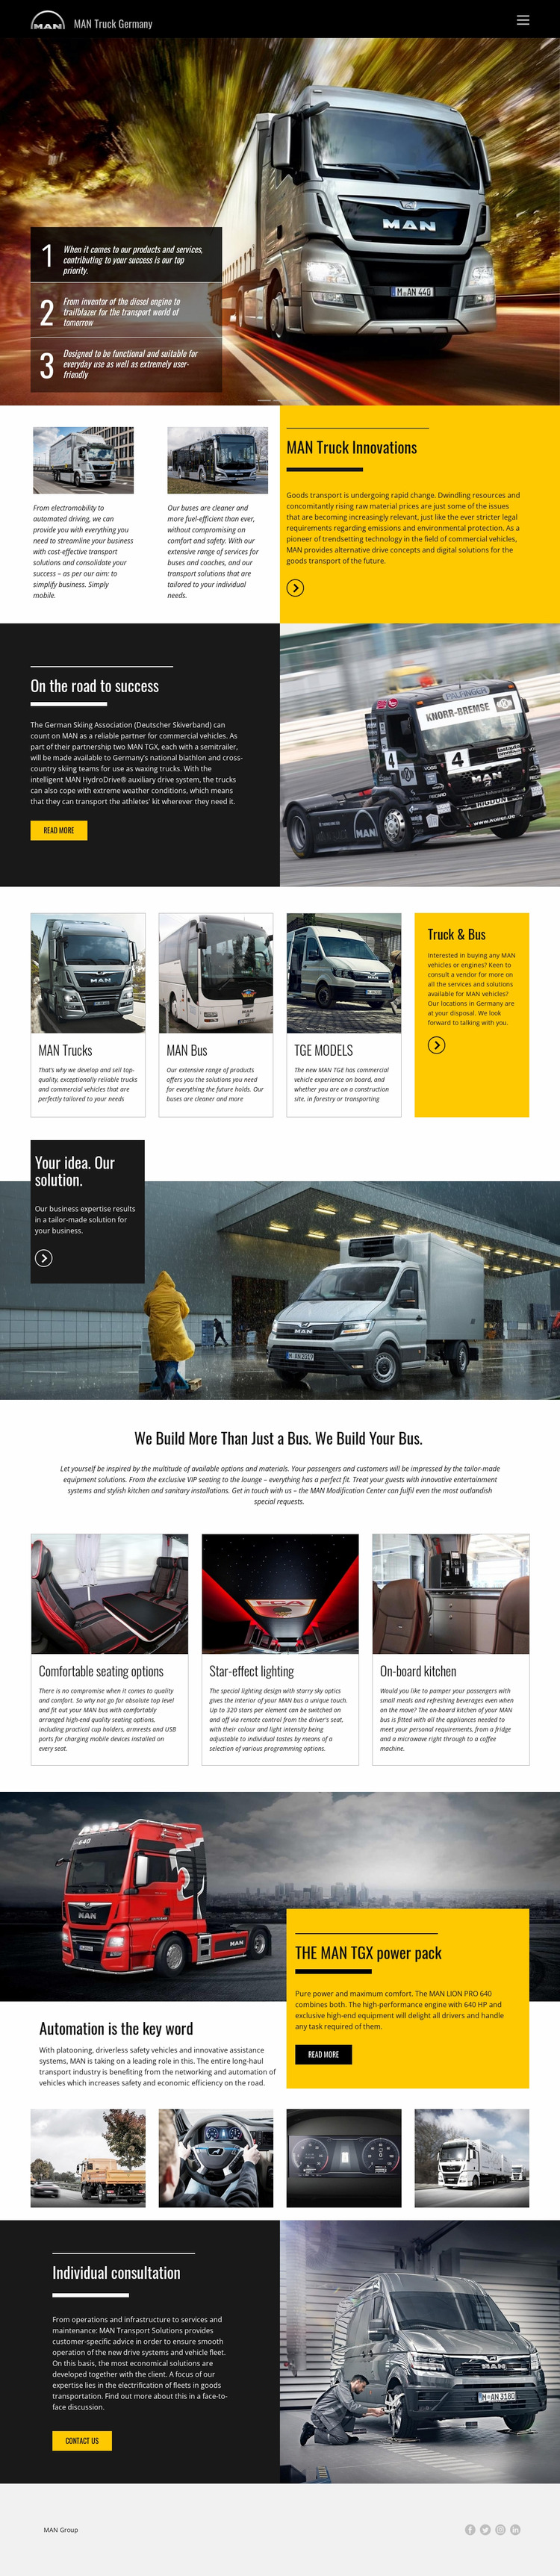 Man trucks for transportation WordPress Website Builder